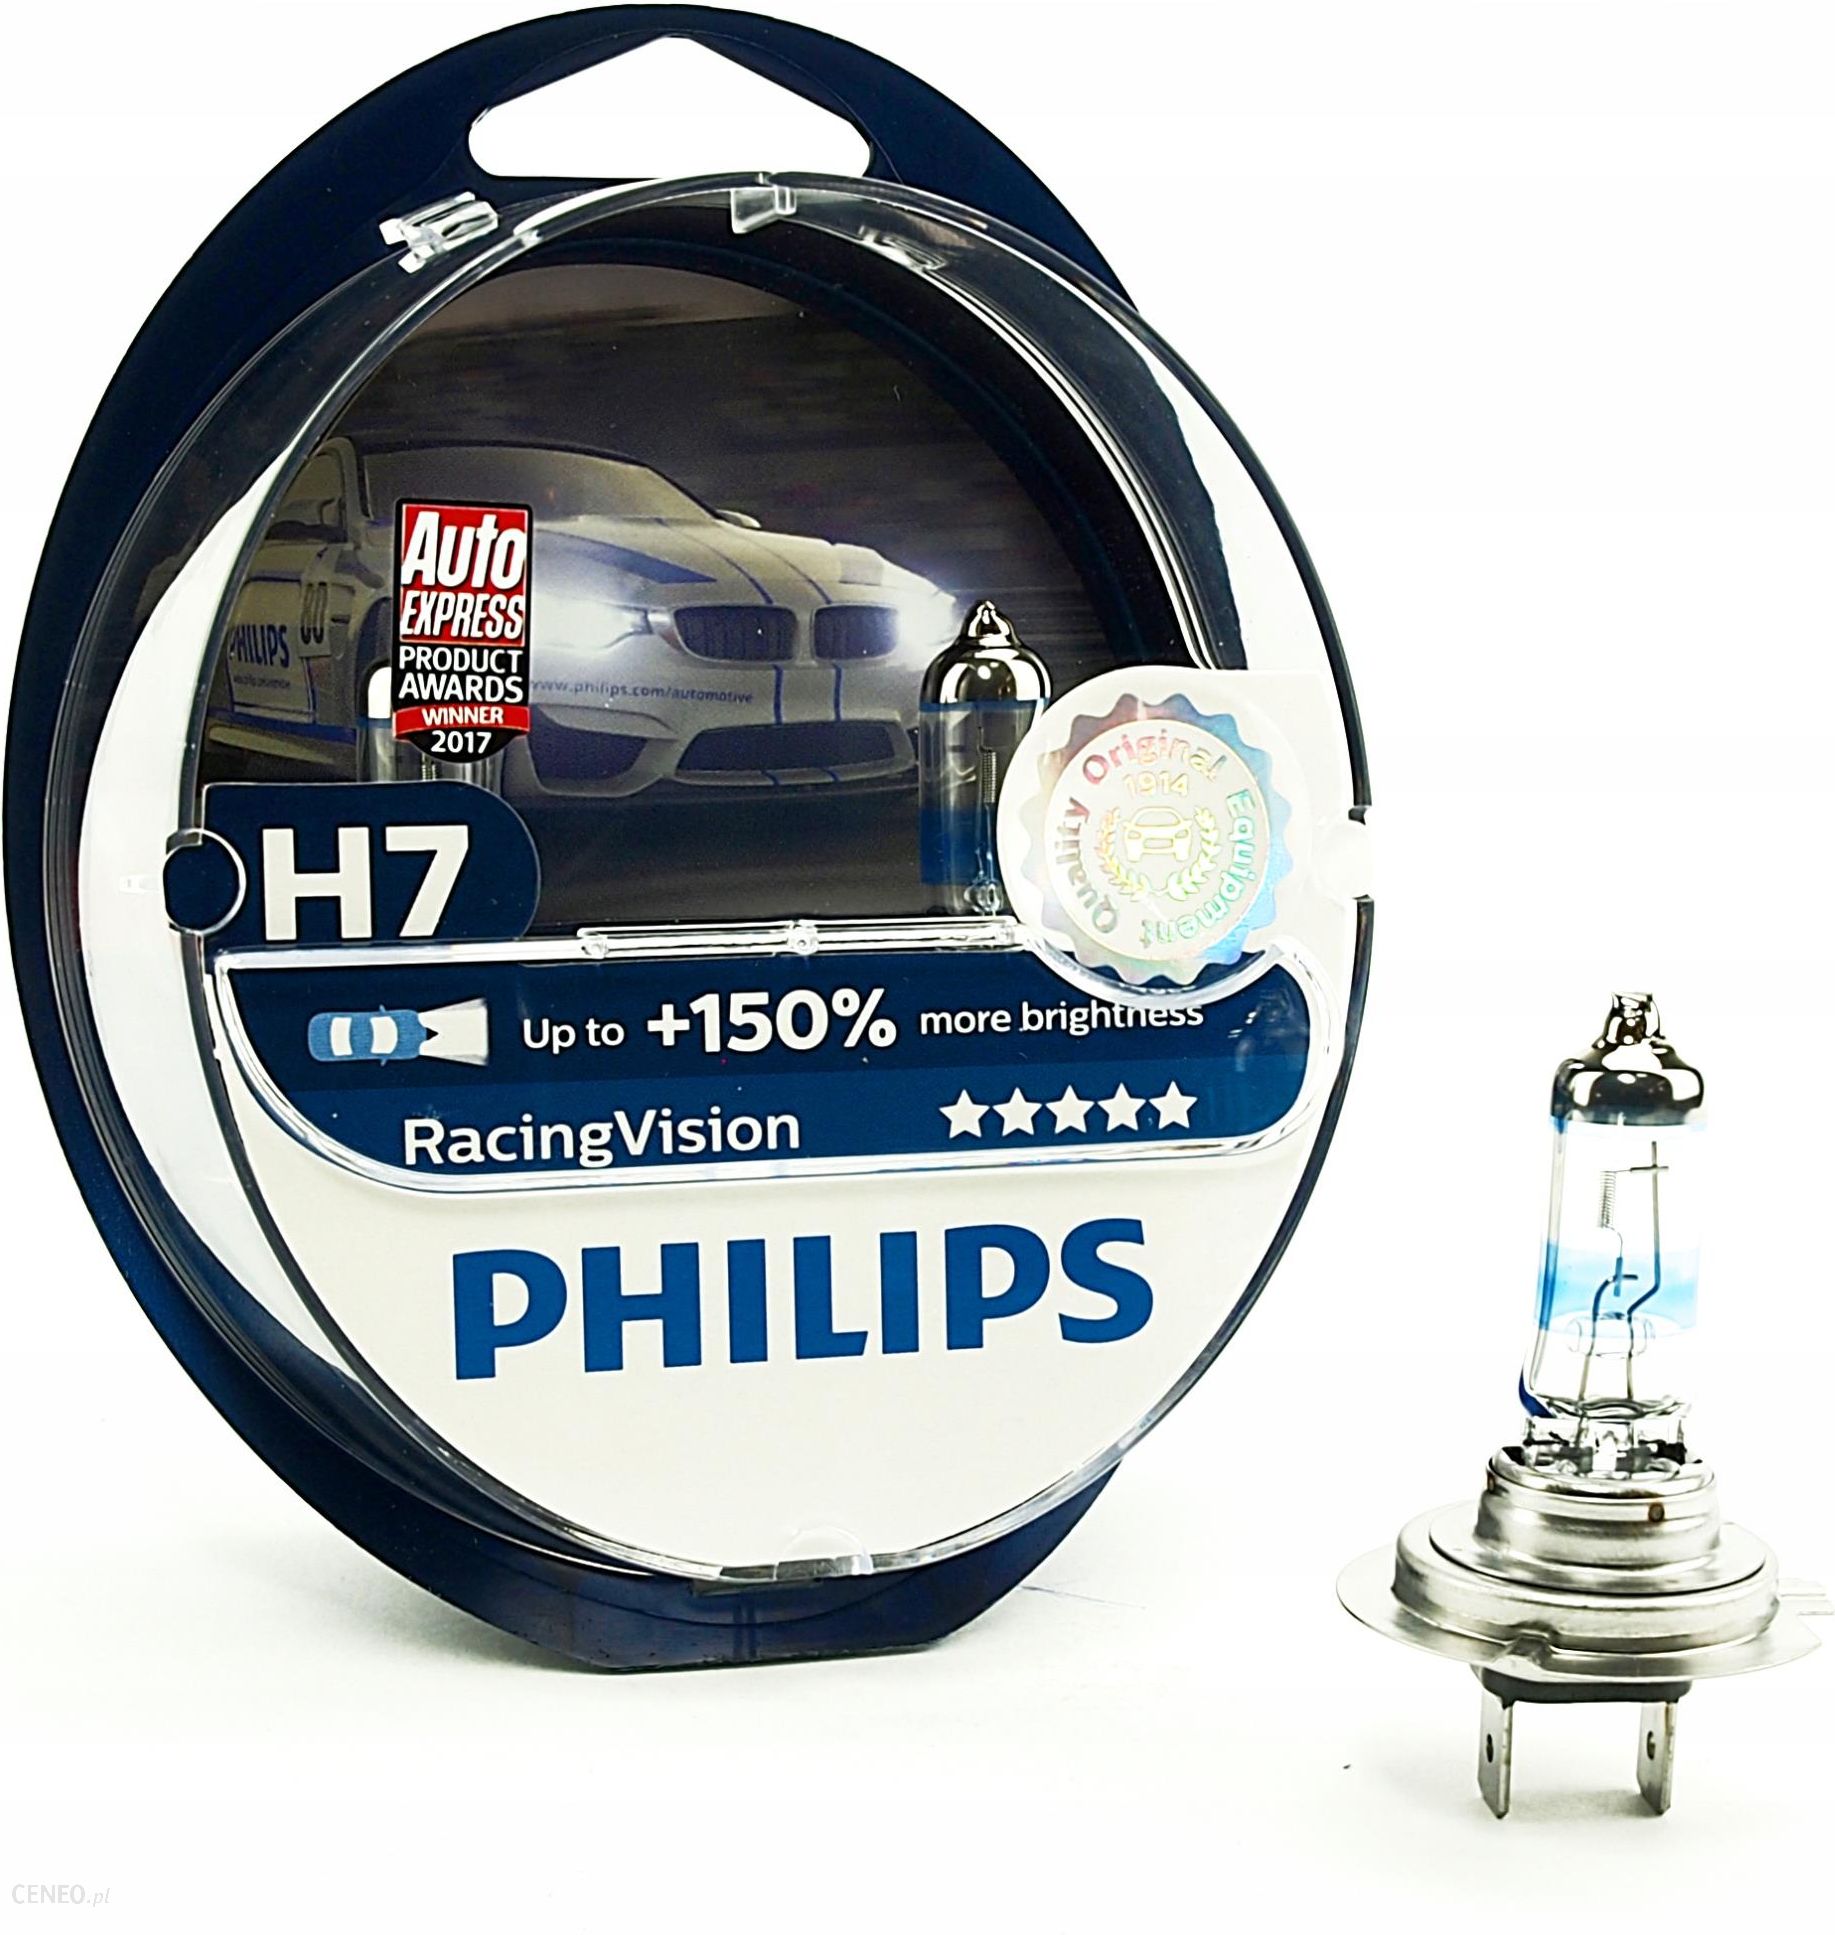 Филипс х. H7 Philips RACINGVISION +150. Лампы Филипс h7 рейсинг Вижн 150. Philips лампы h7 +150. Лампа Philips Racing Vision h7.